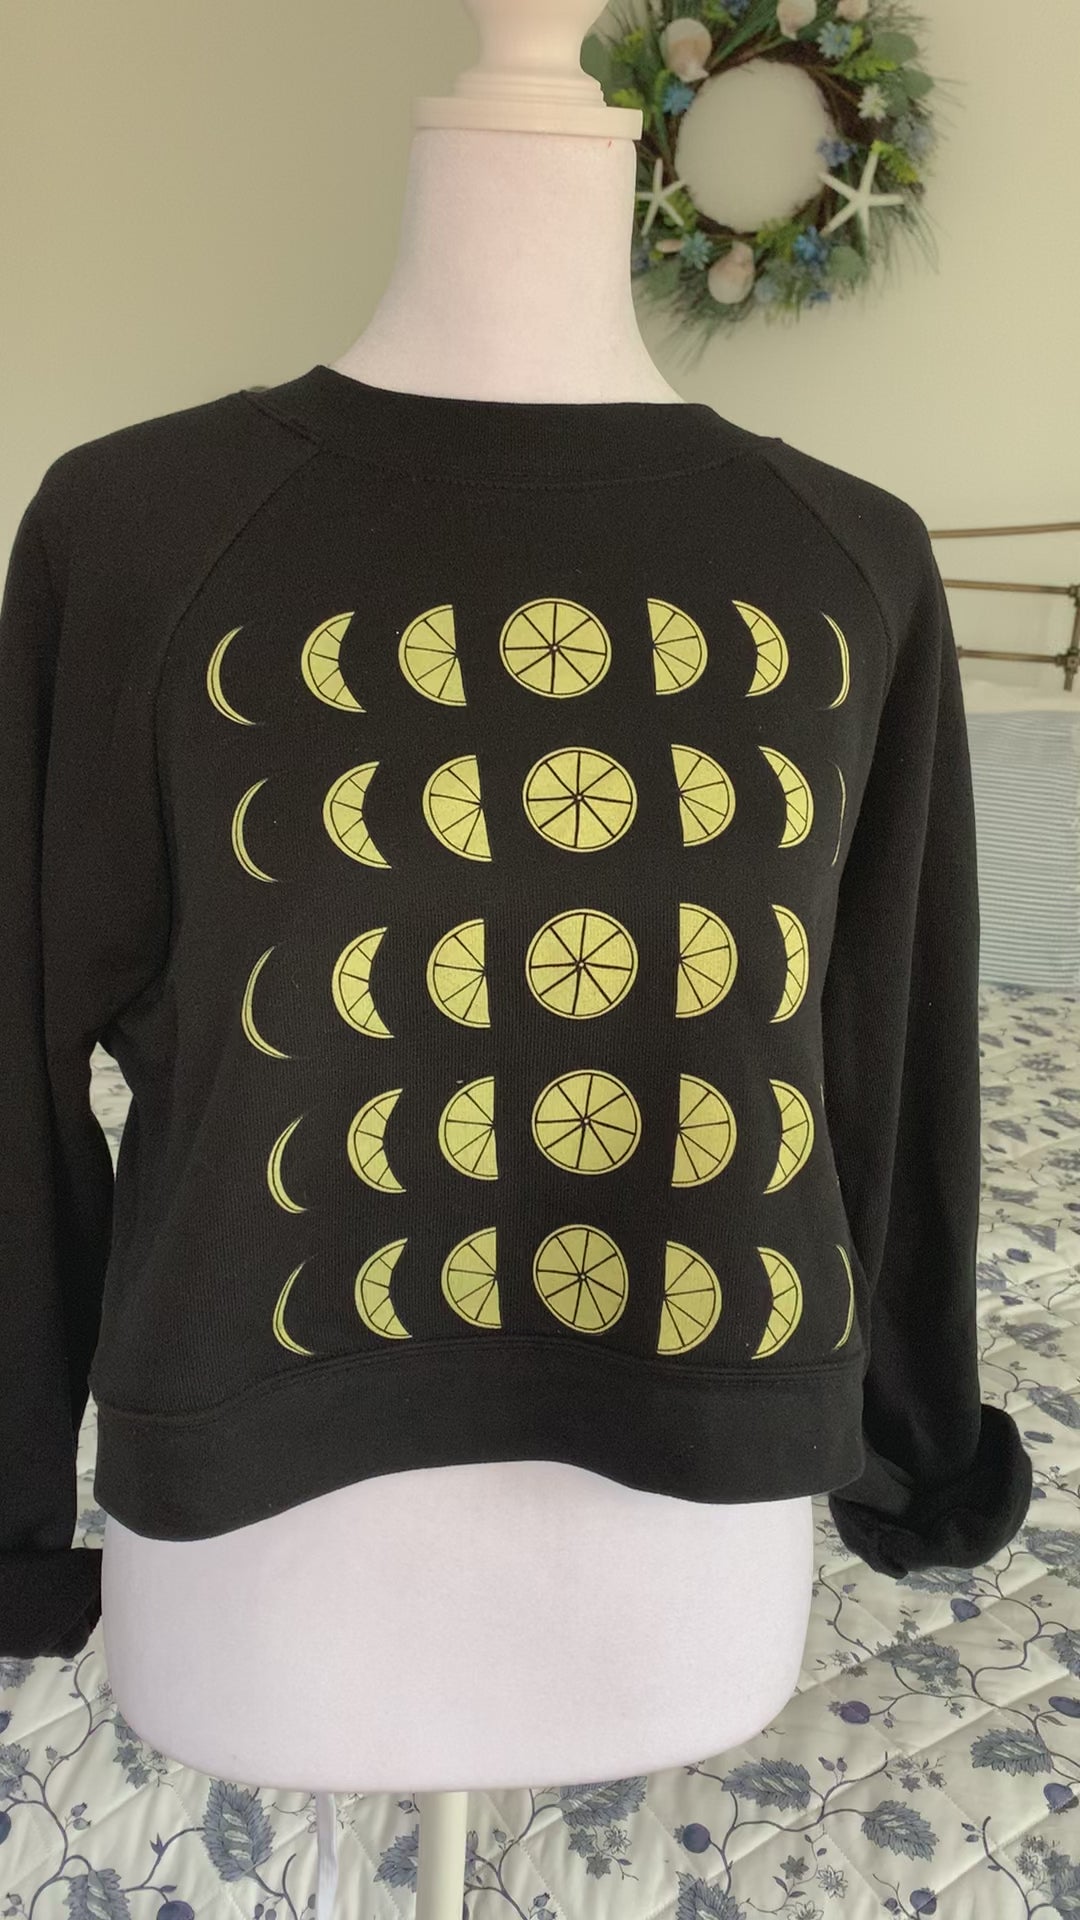 A black cropped sweatshirt with lemon moon phase design hangs on a manikin